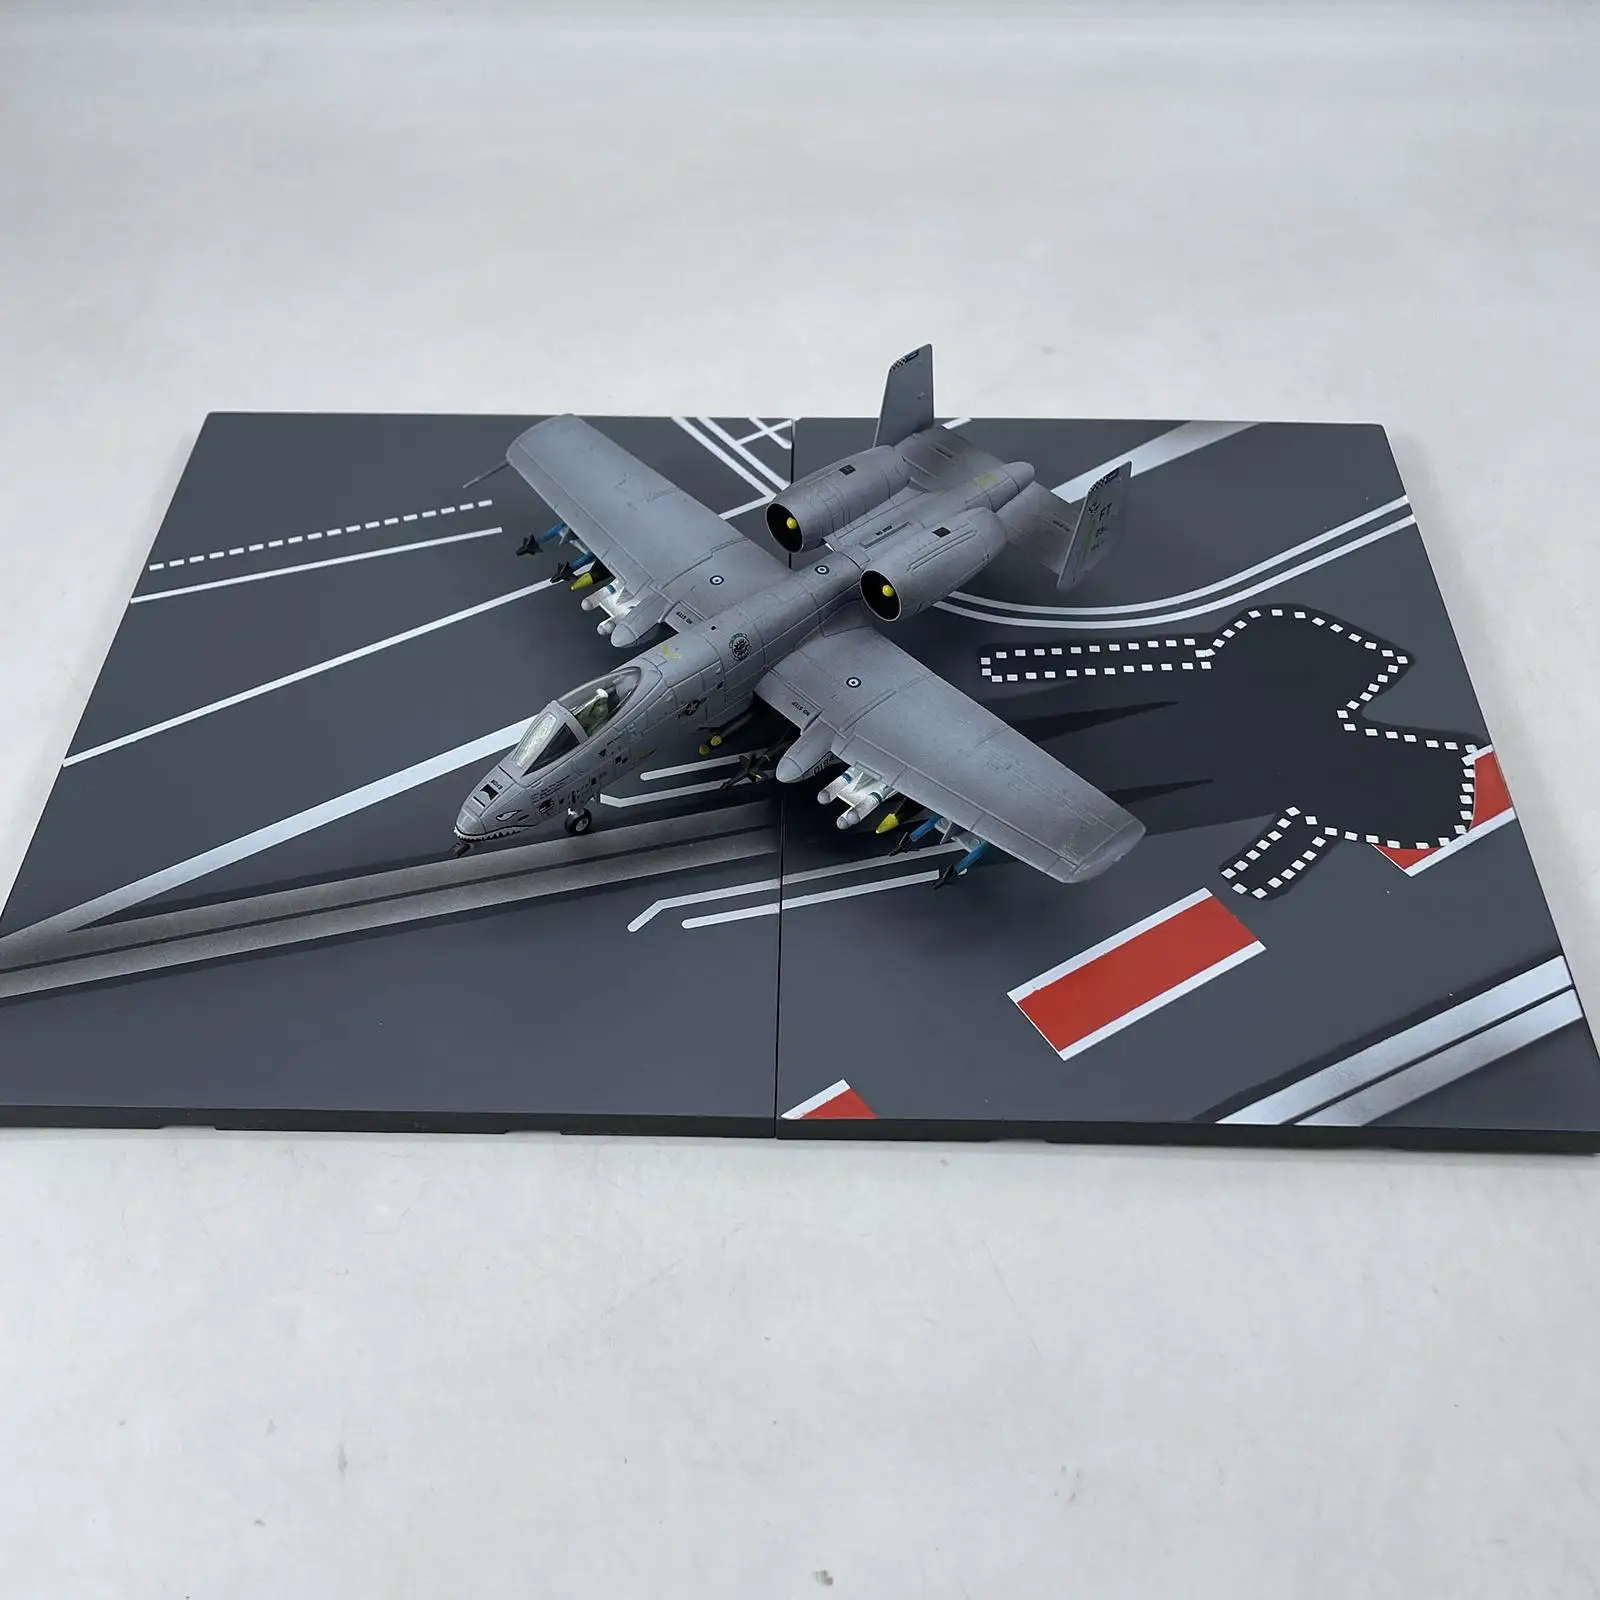  Runway Platform Simulation  Apron Toy Vehicle Static